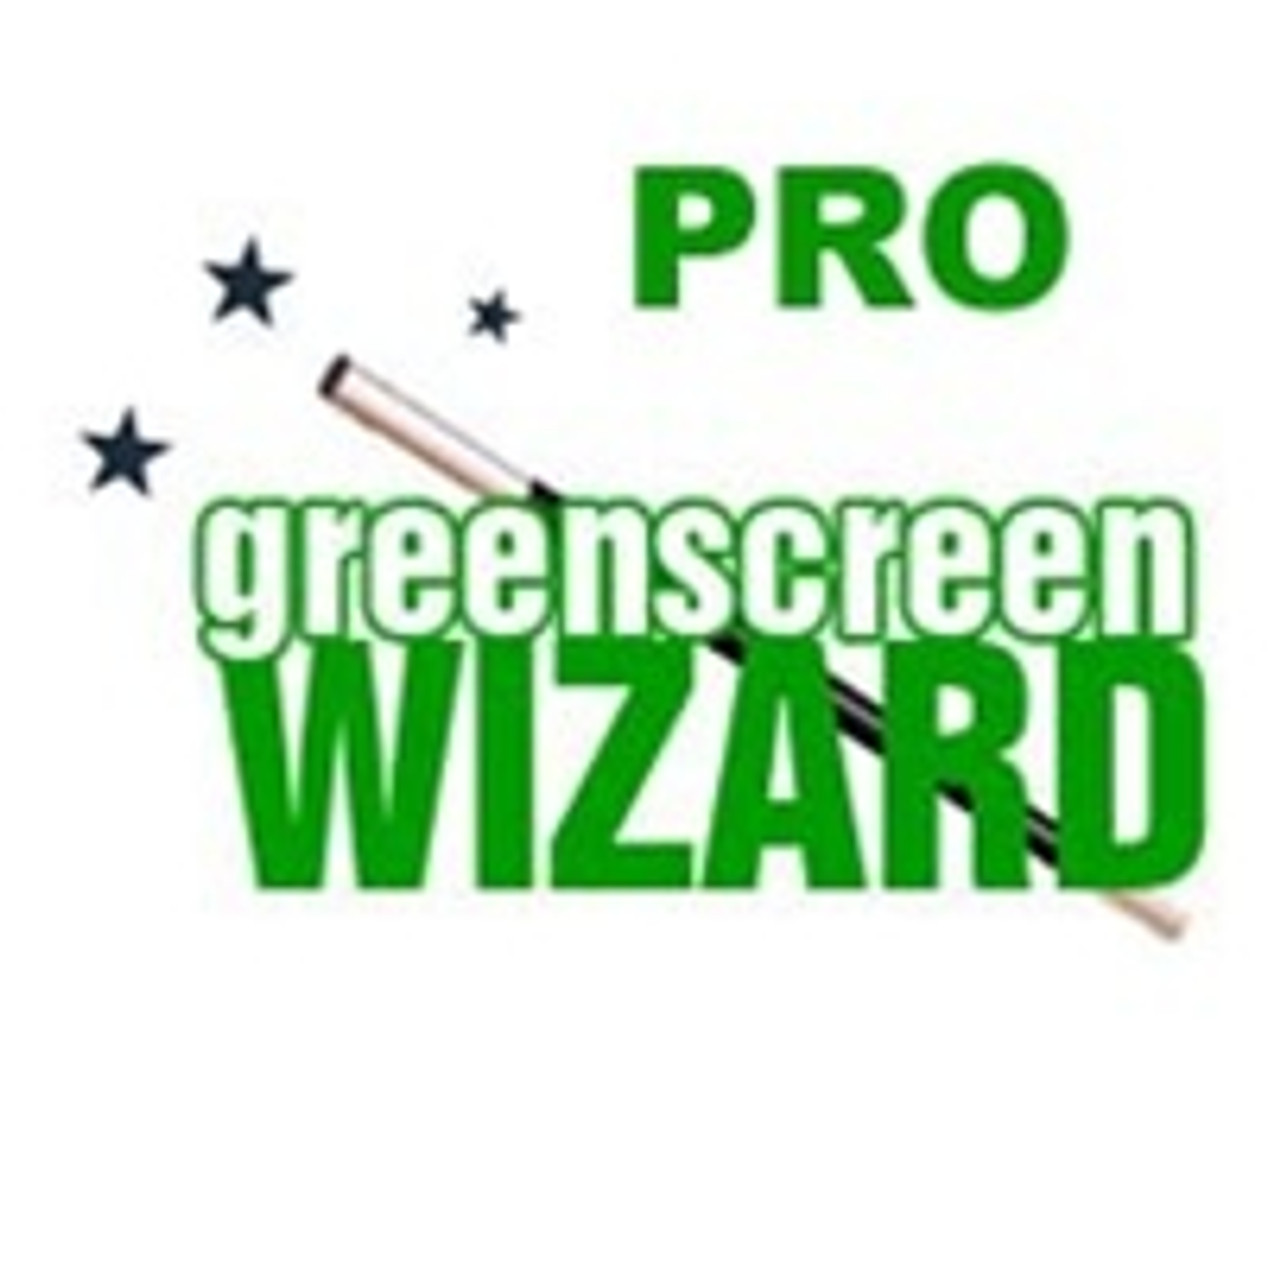 green screen wizard pro editor demo free download